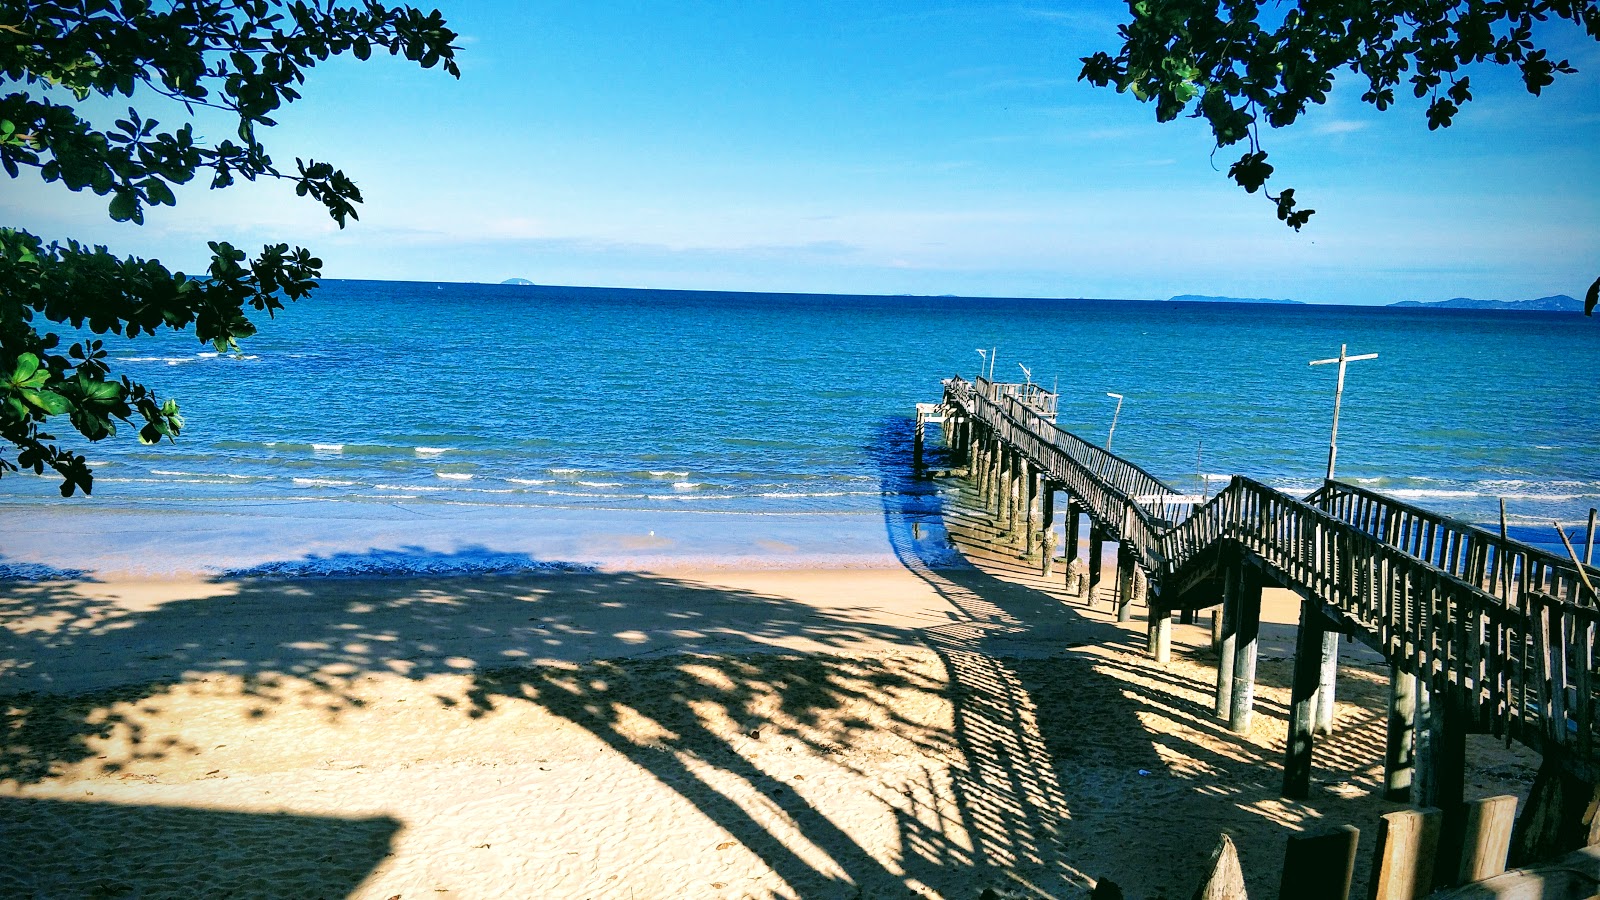 Foto de Tawanron Beach - lugar popular entre os apreciadores de relaxamento